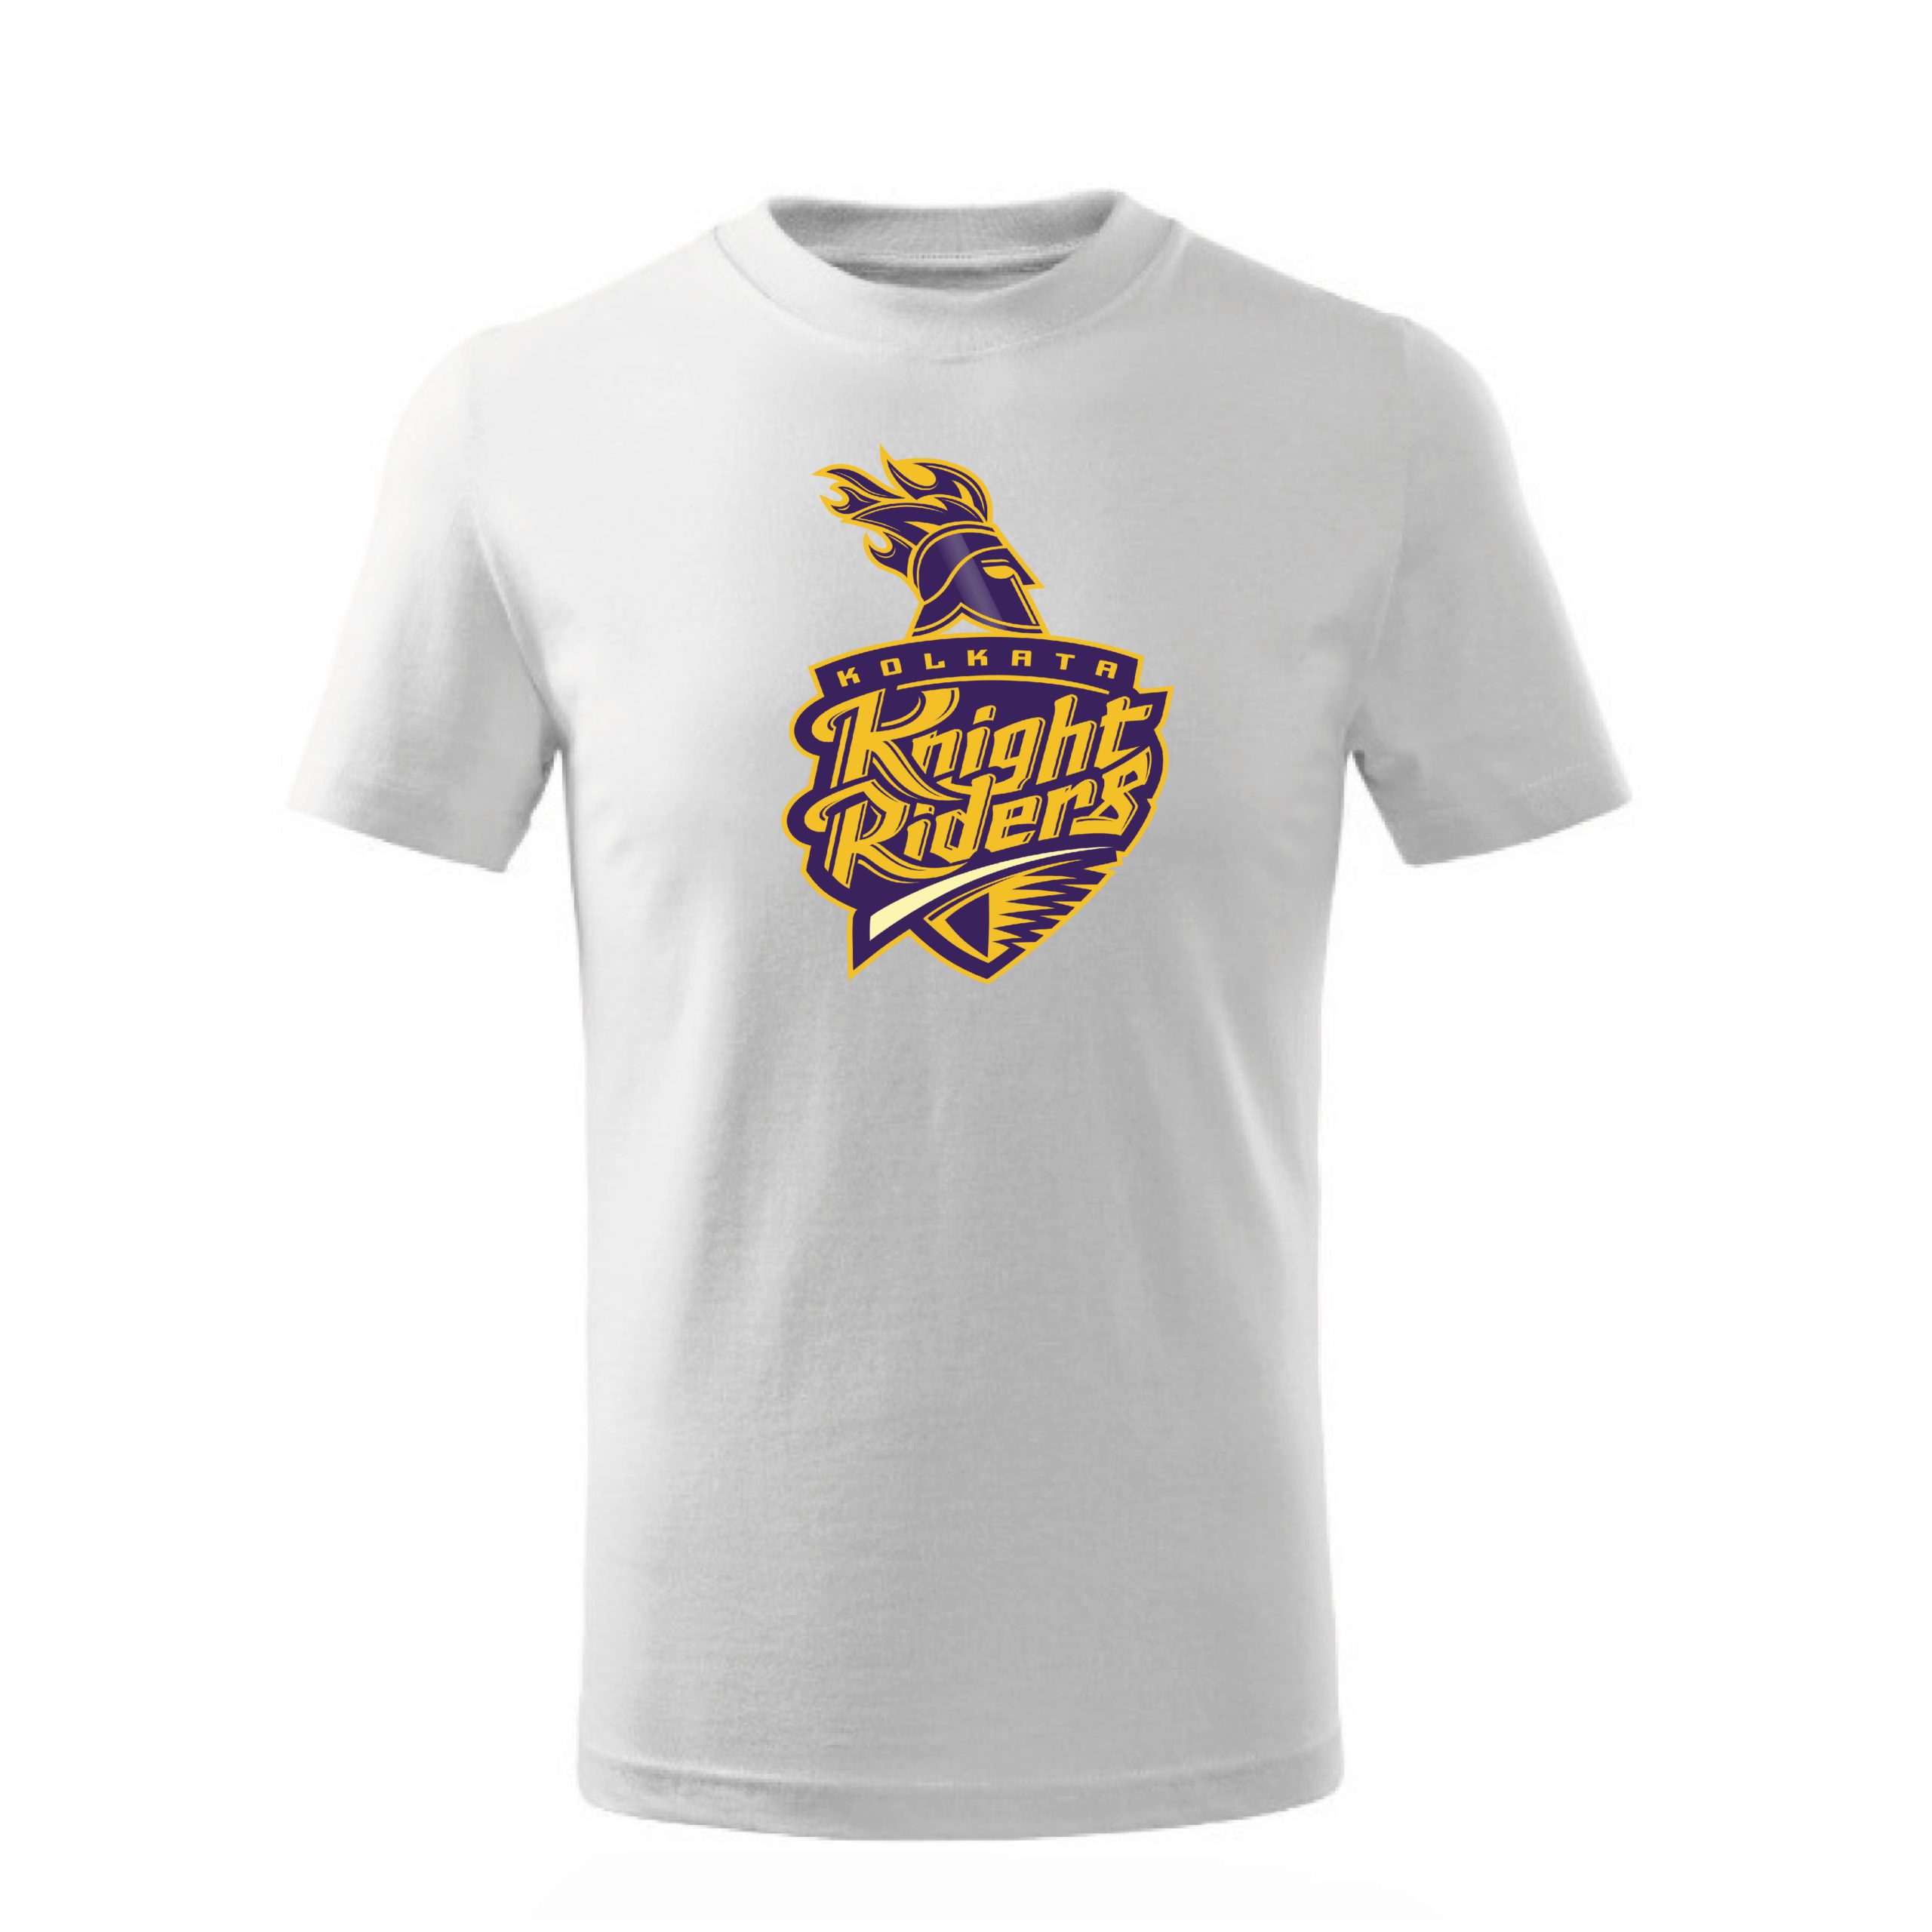 IPL T-shirt for KKR (Kolkata Knight Riders)